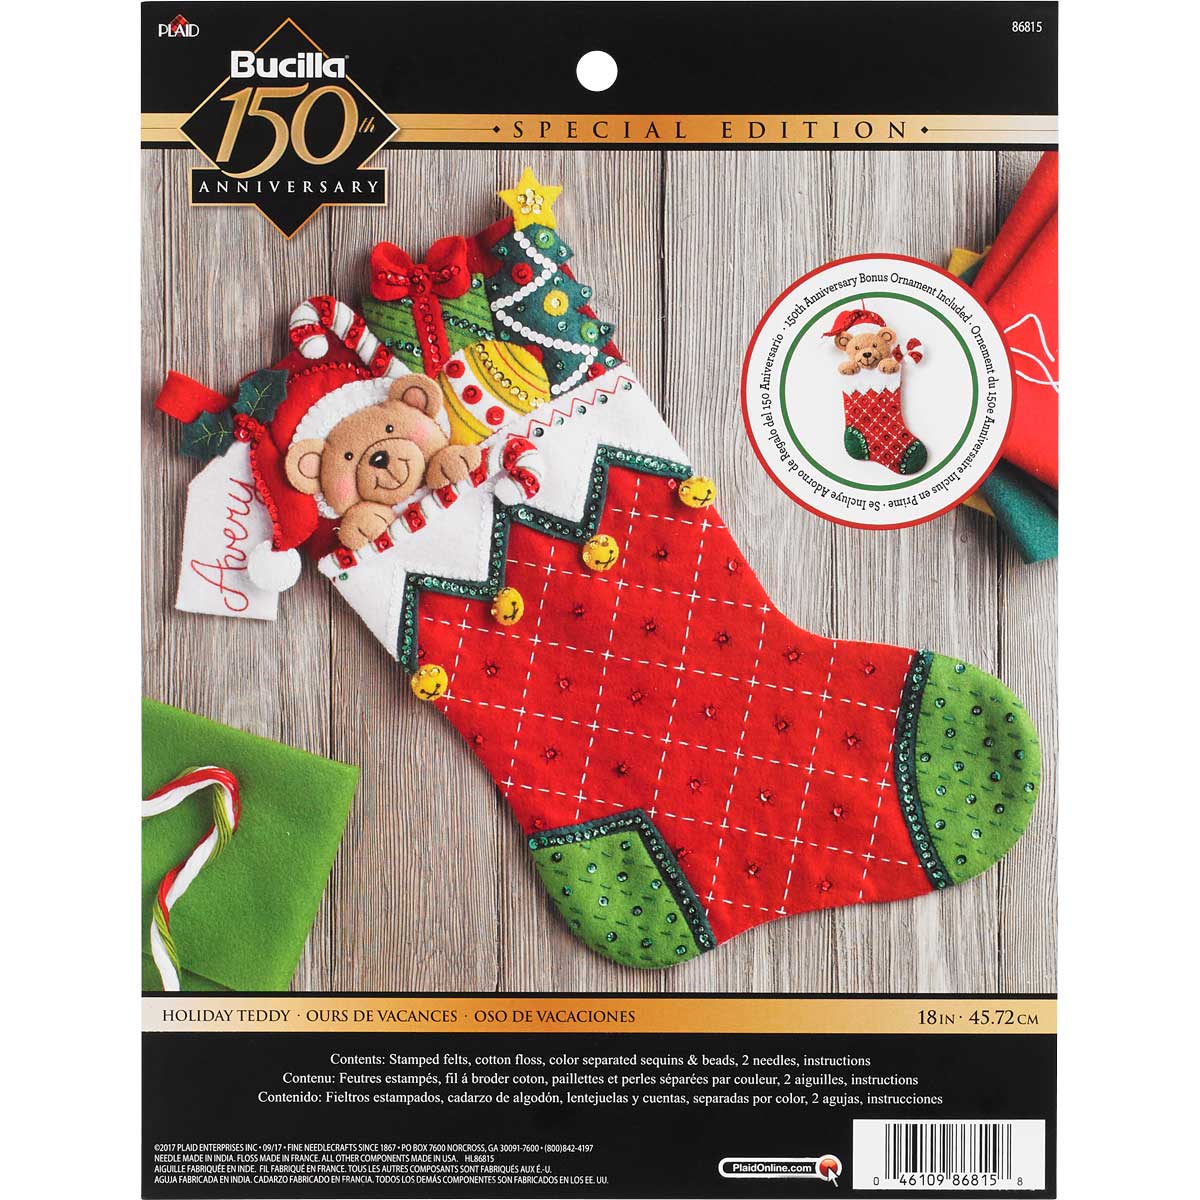 Candy Express Felt Christmas Stocking Kit - Bucilla Felt Stockings at  Weekend Kits